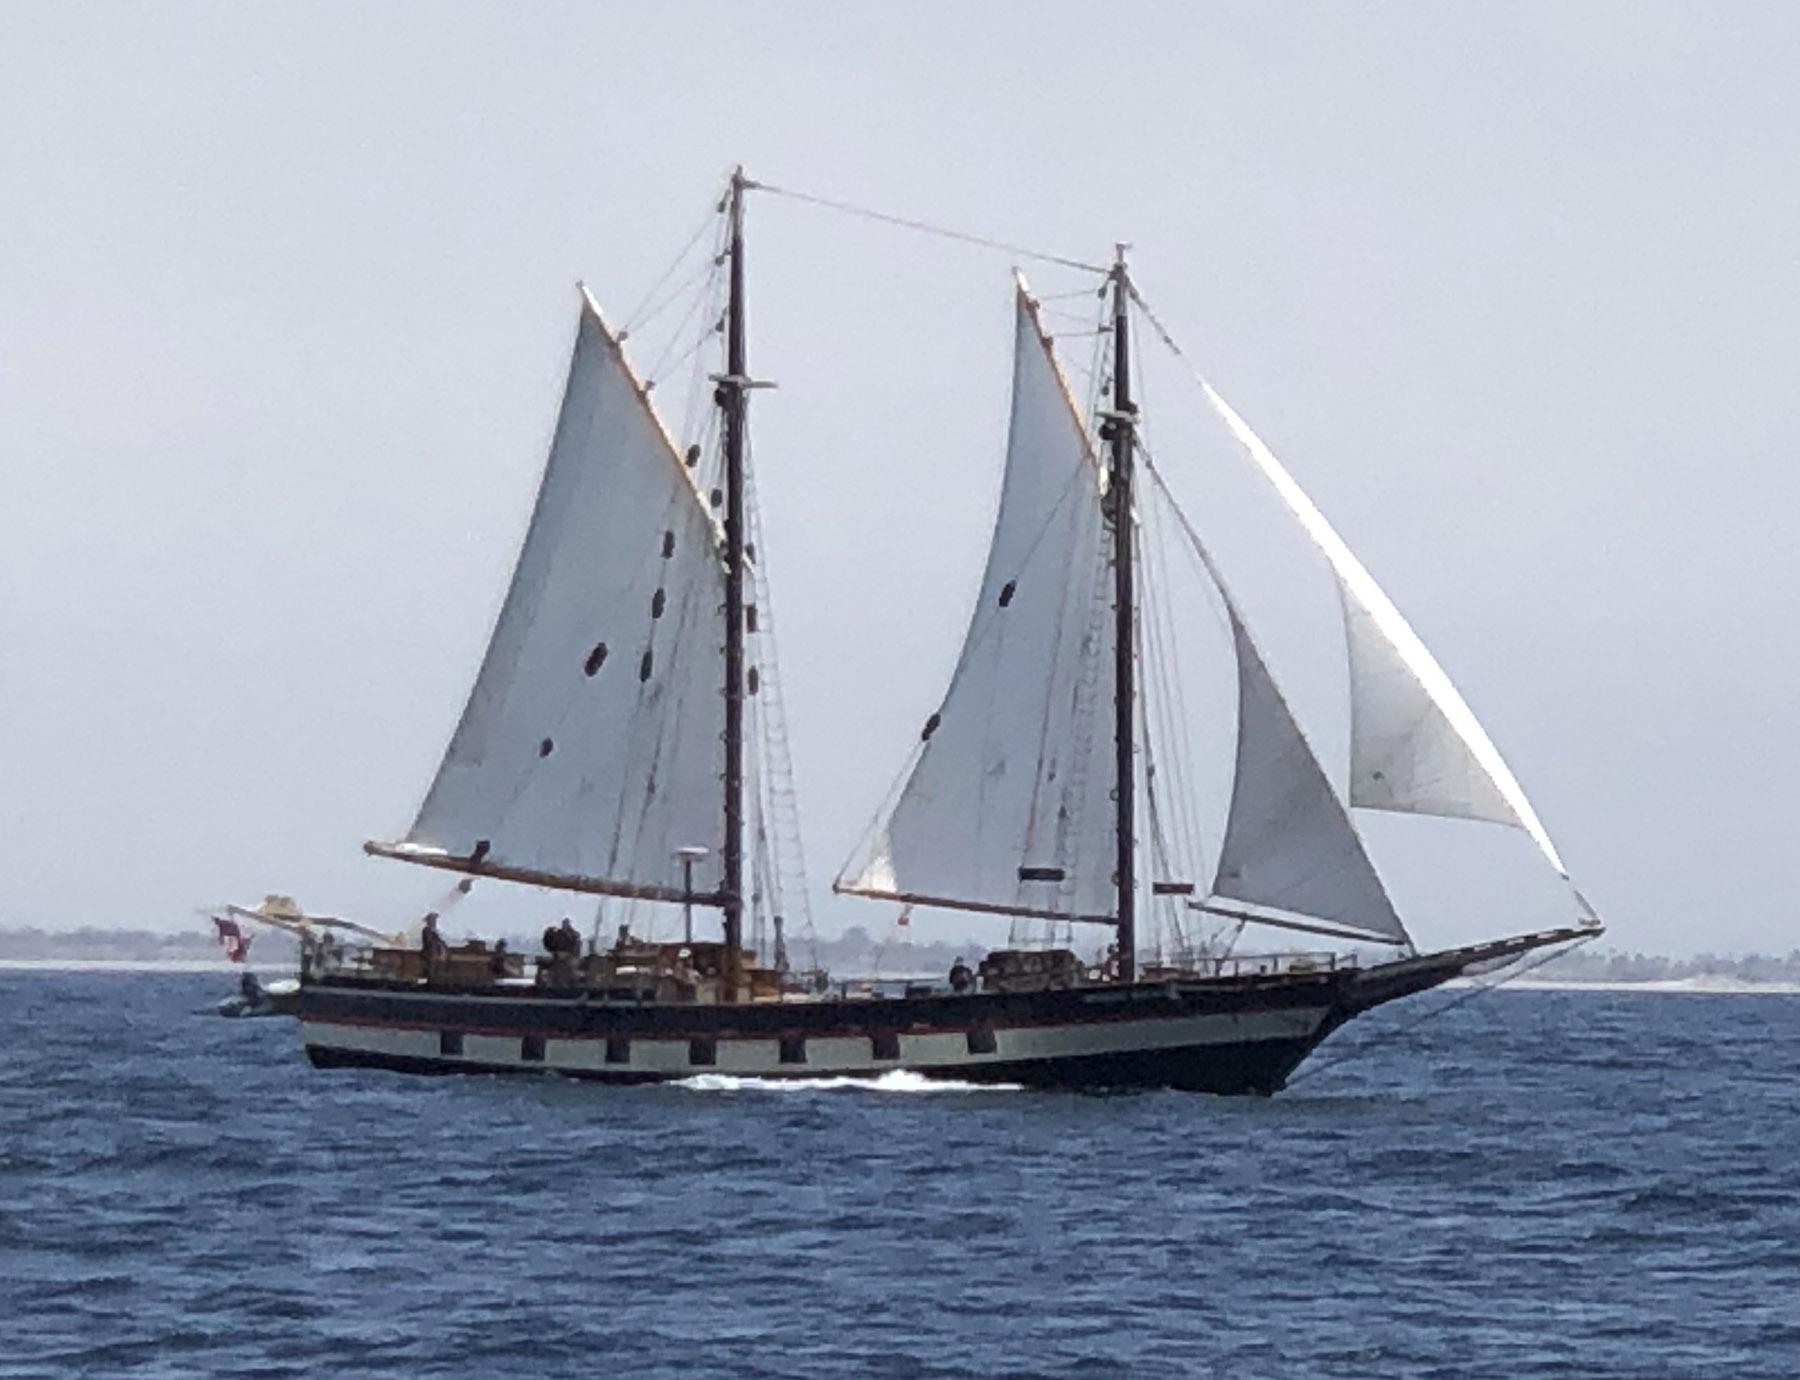 Mystic Whaler under sail